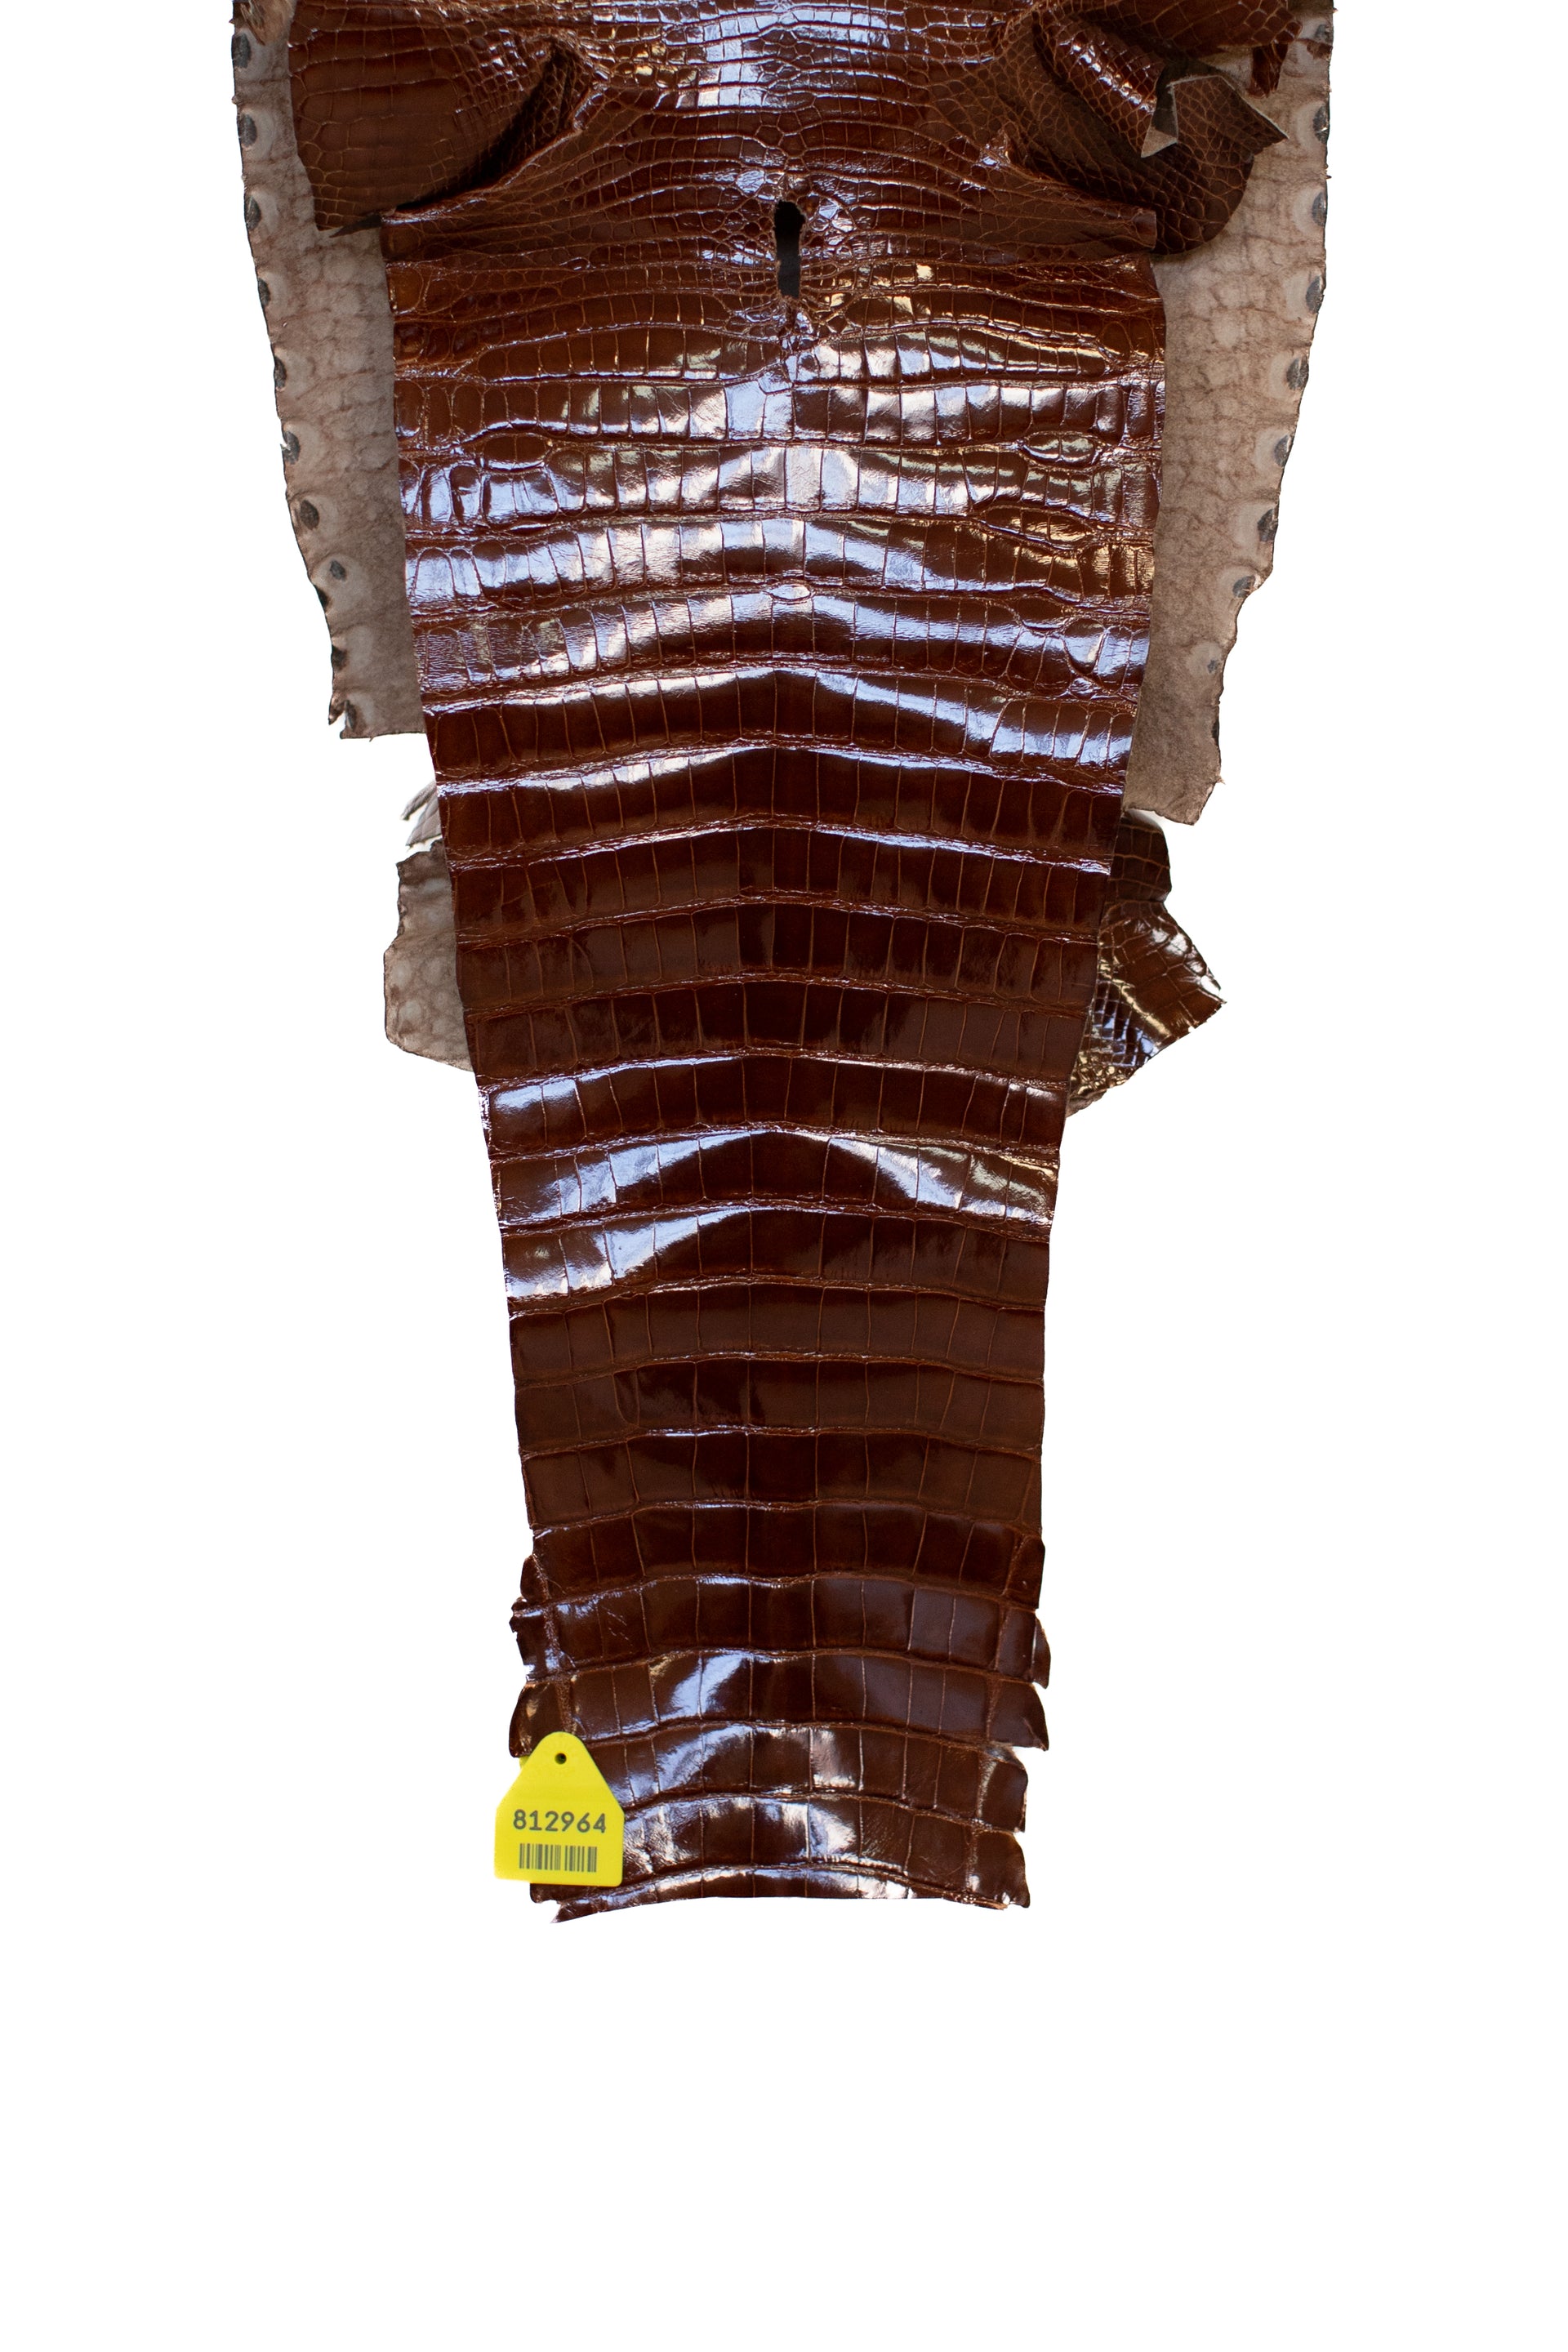 33 cm Grade 2/3 Peanut Glazed Wild American Alligator Leather - Tag: AT15-0812964